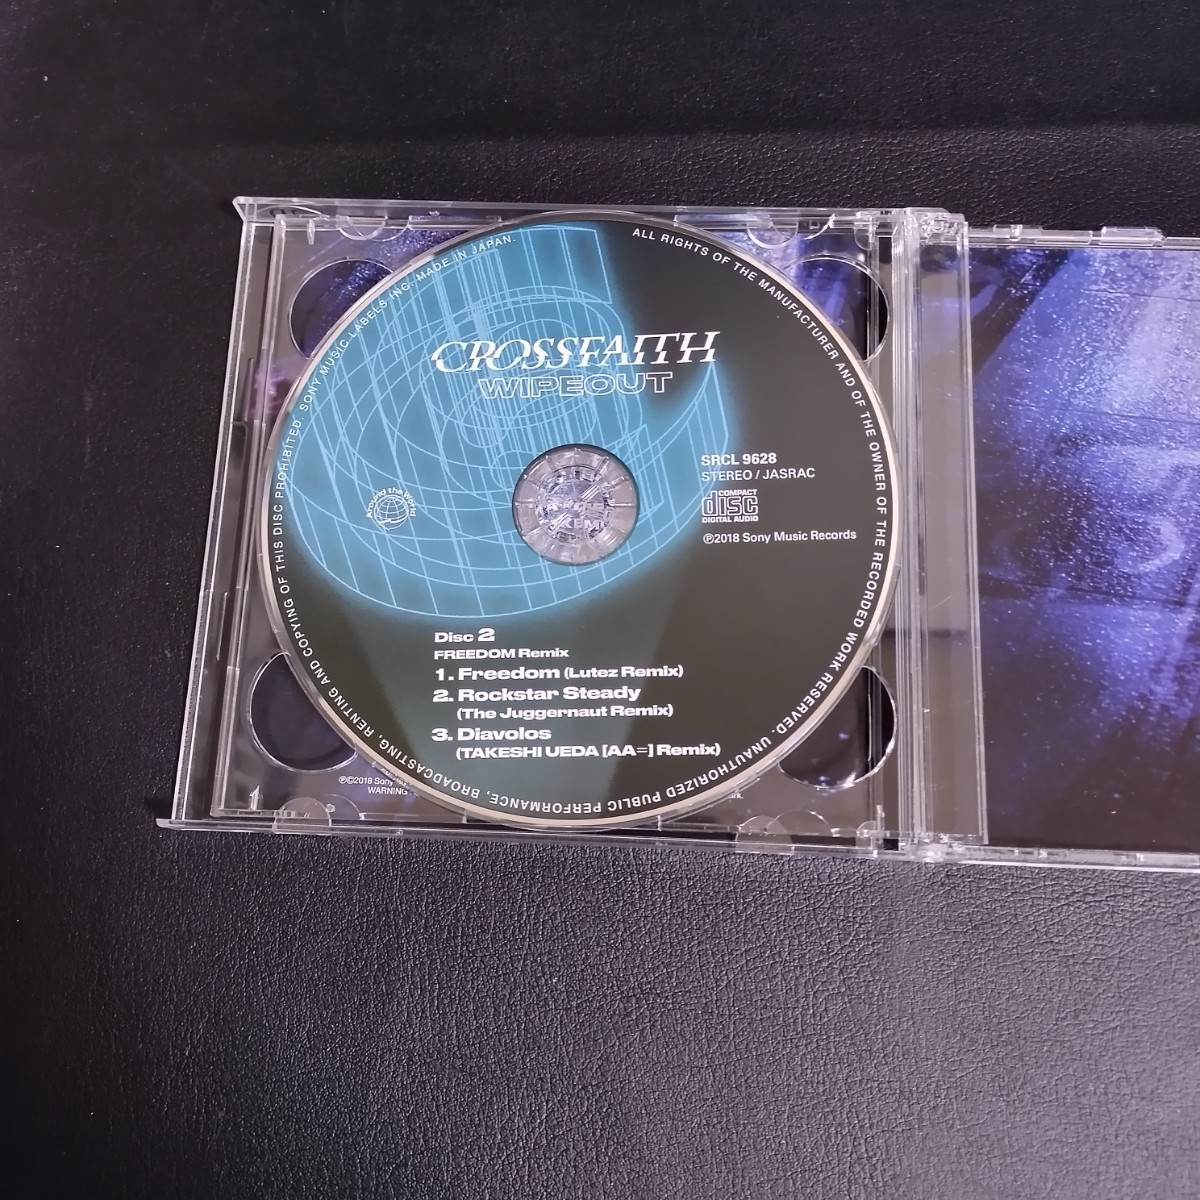 【Crossfaith】クロスフェイス WIPEOUT[初回限定盤B] 邦楽CD 2枚組 2018年 メタルコアバンド_画像3